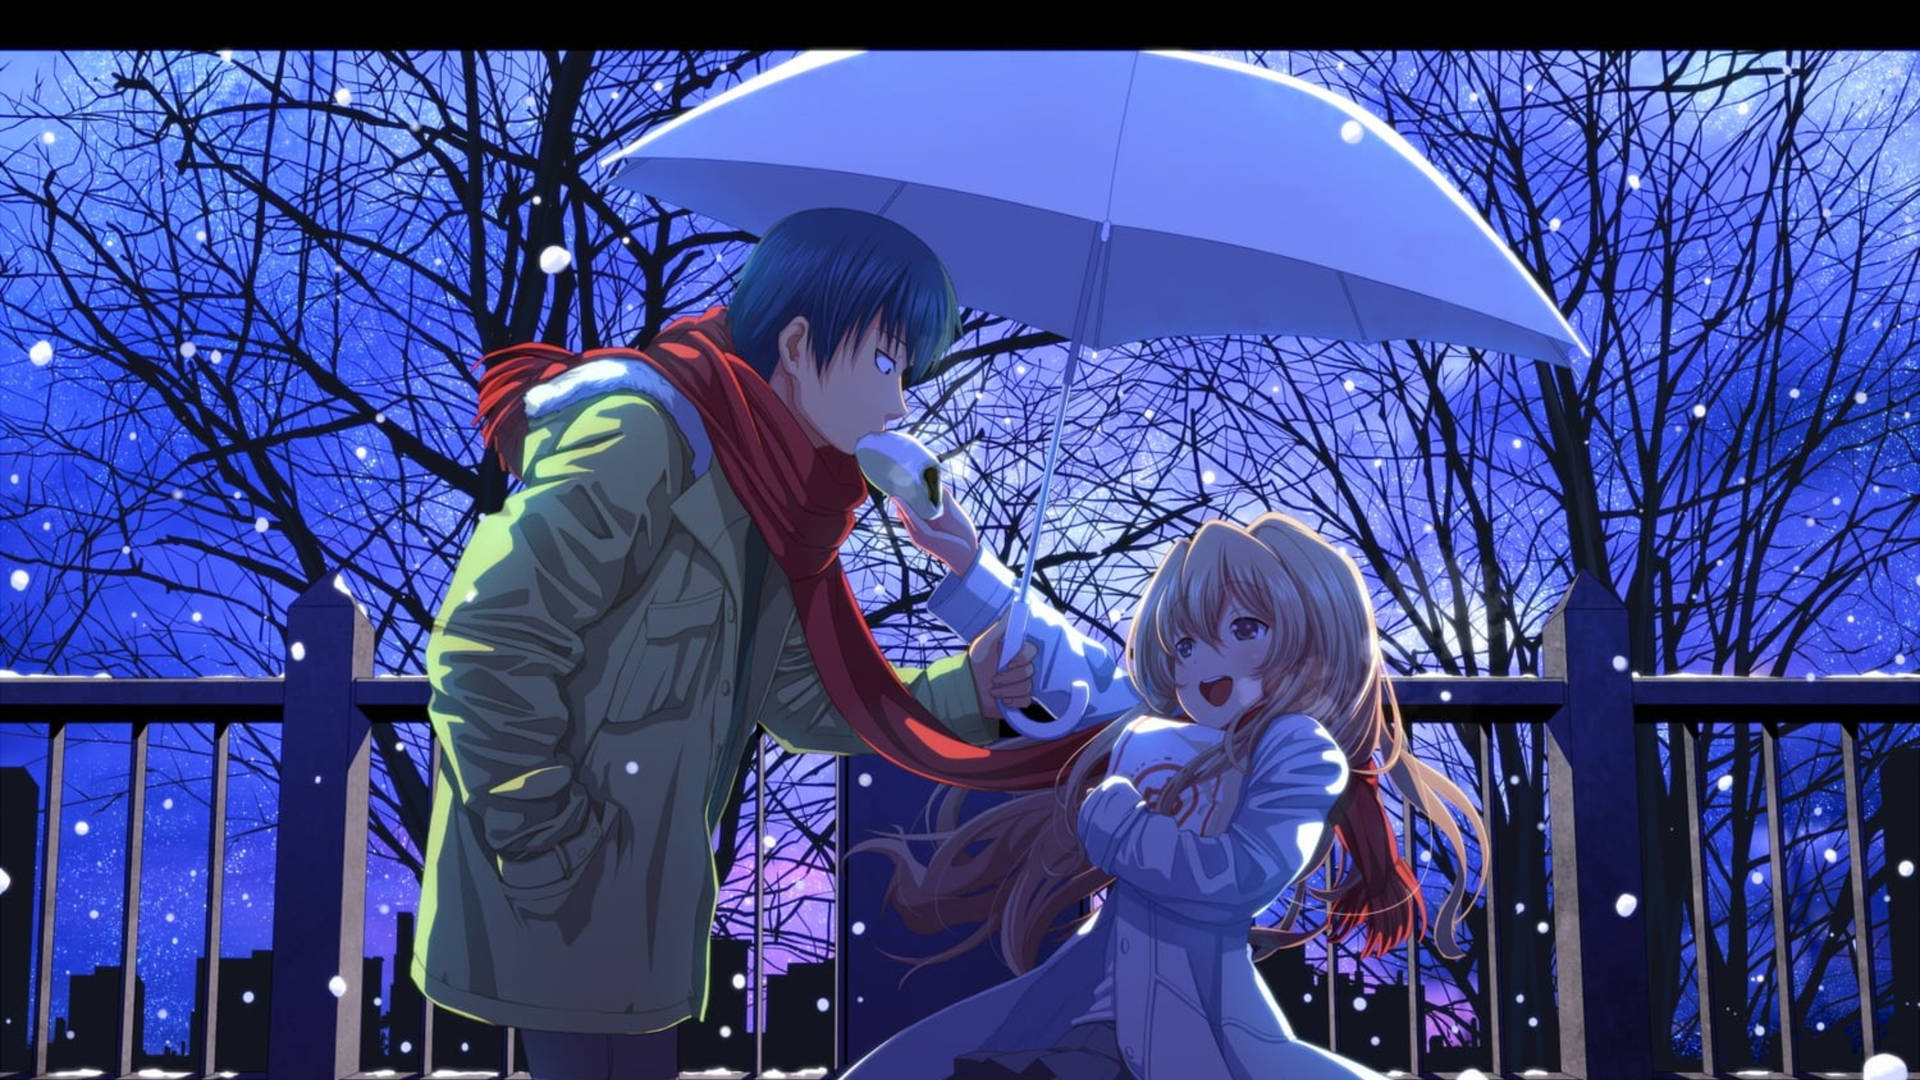 Cute Anime Couple Winter Walk Background